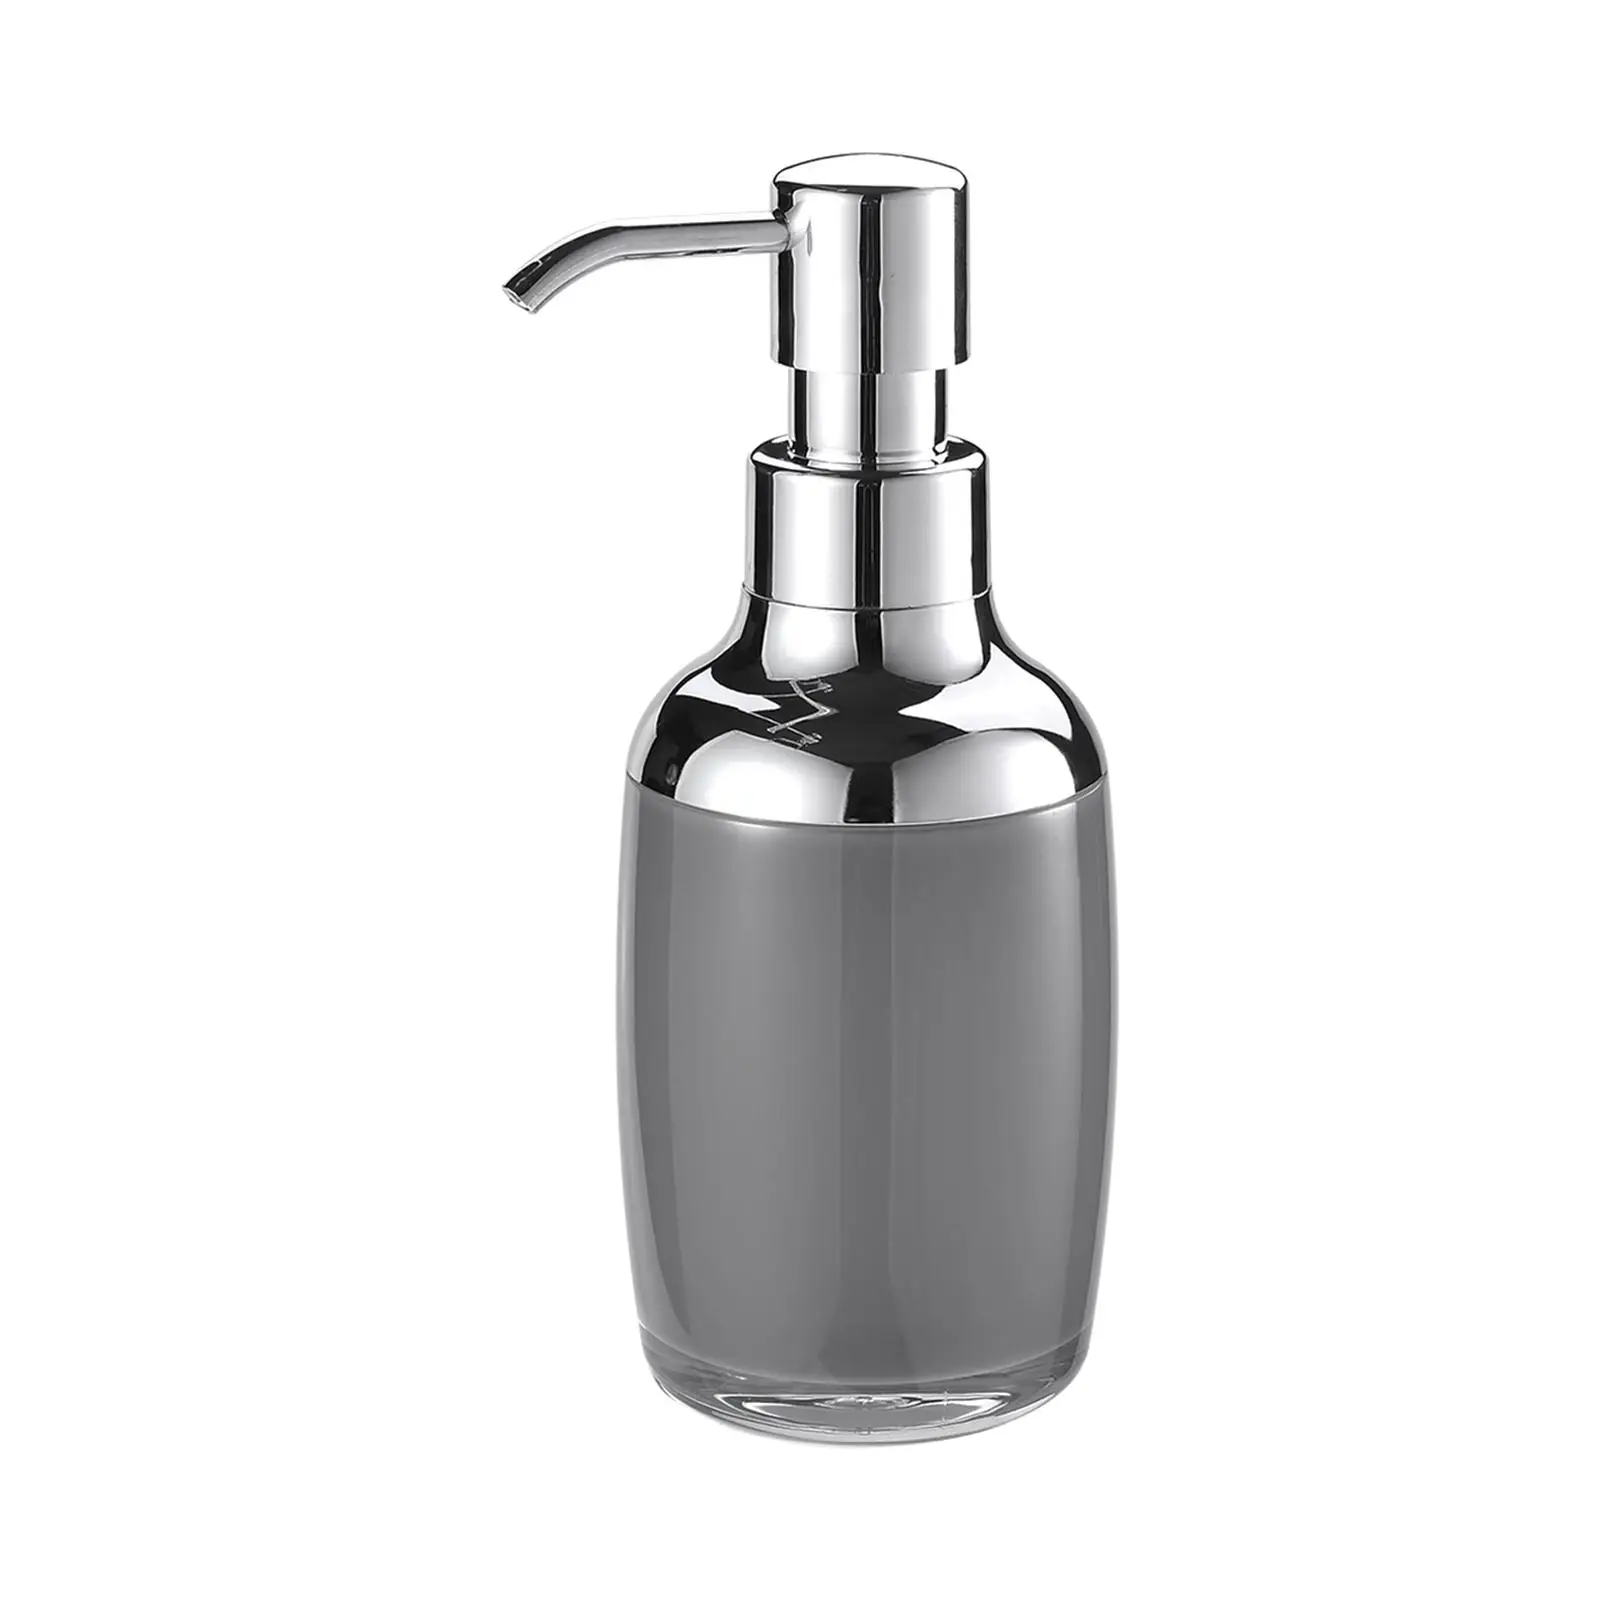 Refillable Empty Hand Soap Dispenser Liquid Container for Body Wash Farmhouse Bathroom